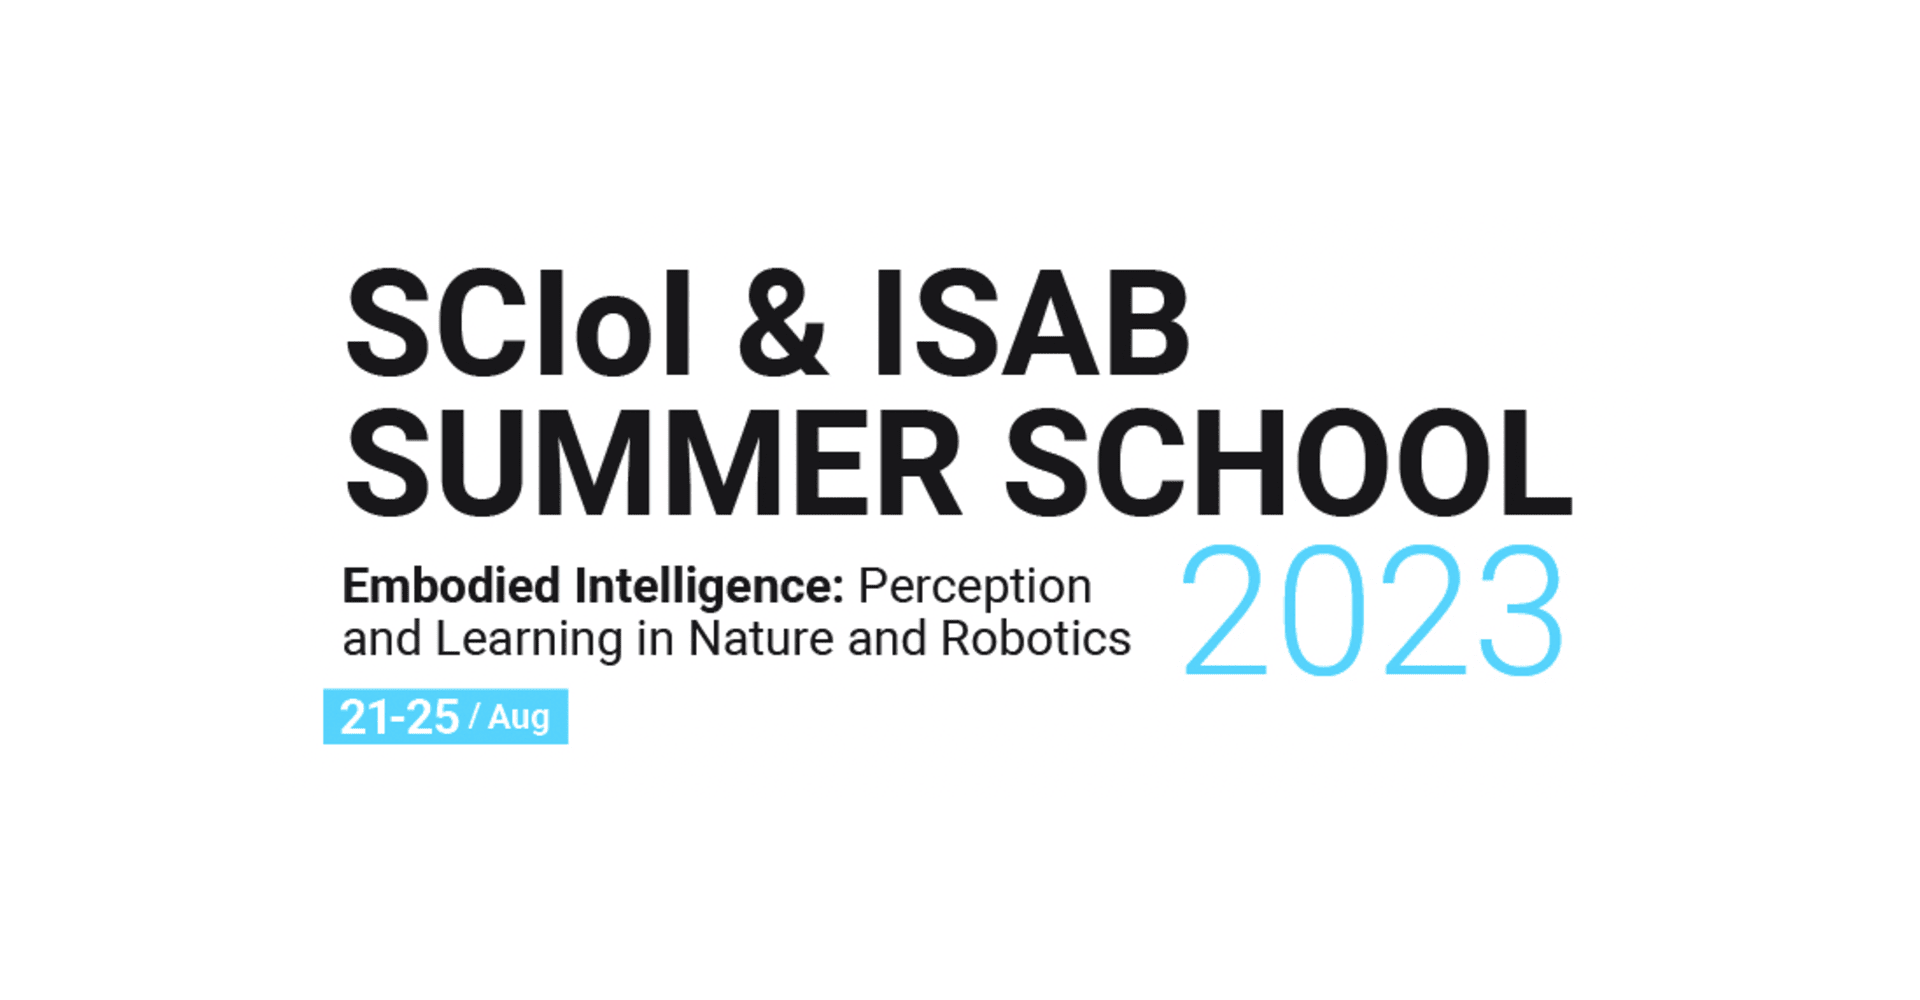 Announcing the SCIoI & ISAB Summer School 2023!